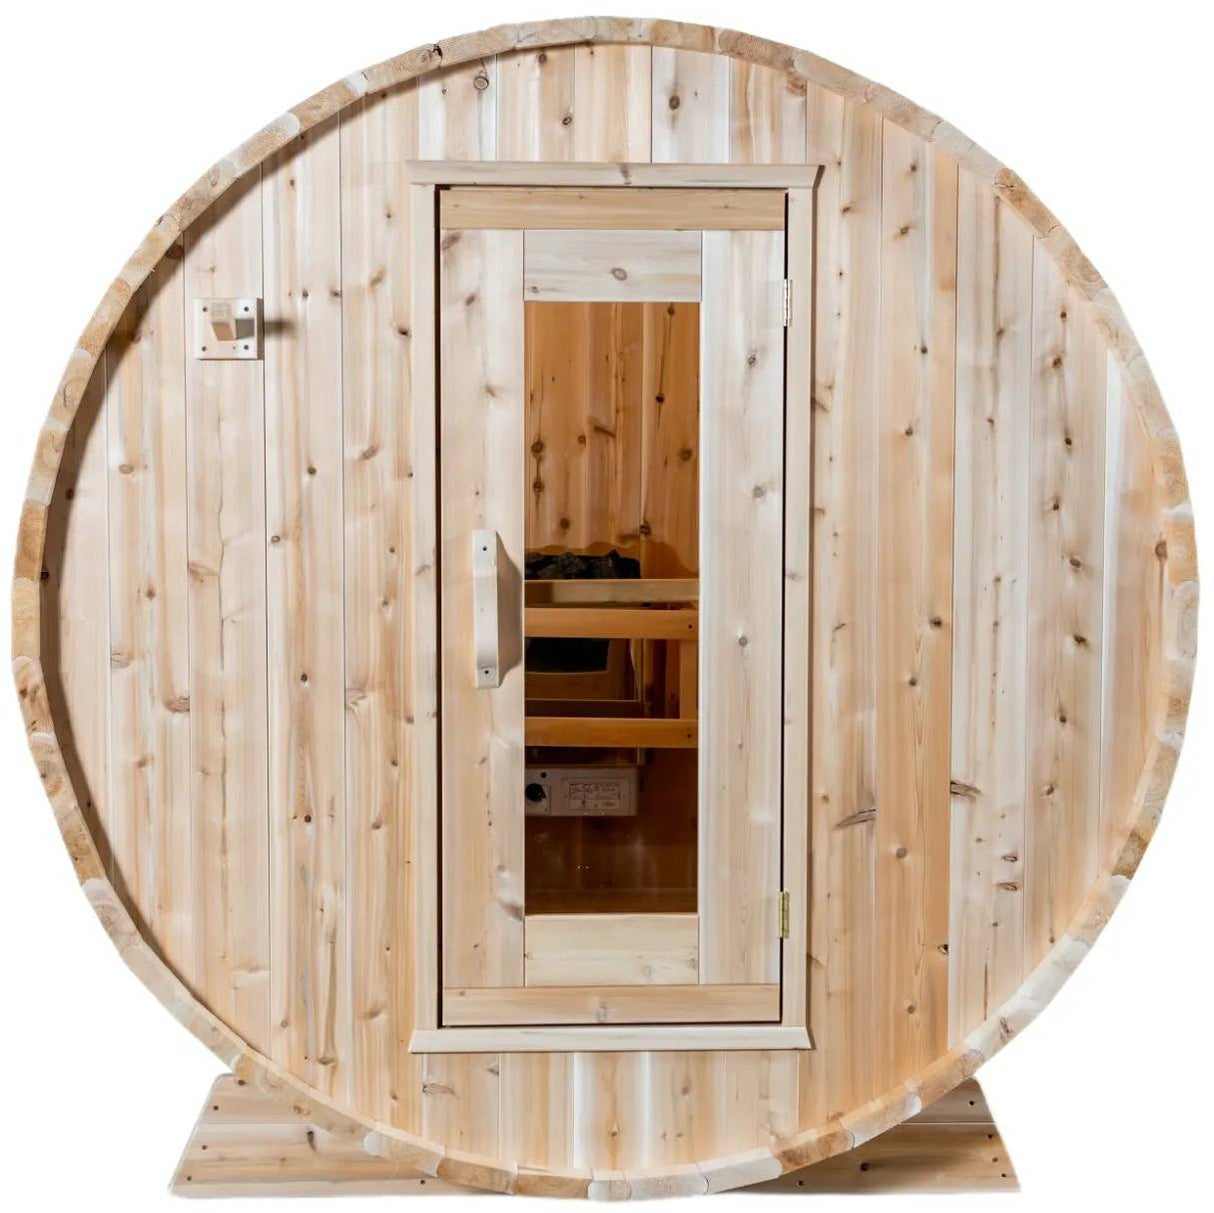 ZiahCare's Dundalk Harmony 4 Person Outdoor Barrel Sauna Kit Mockup Image 5